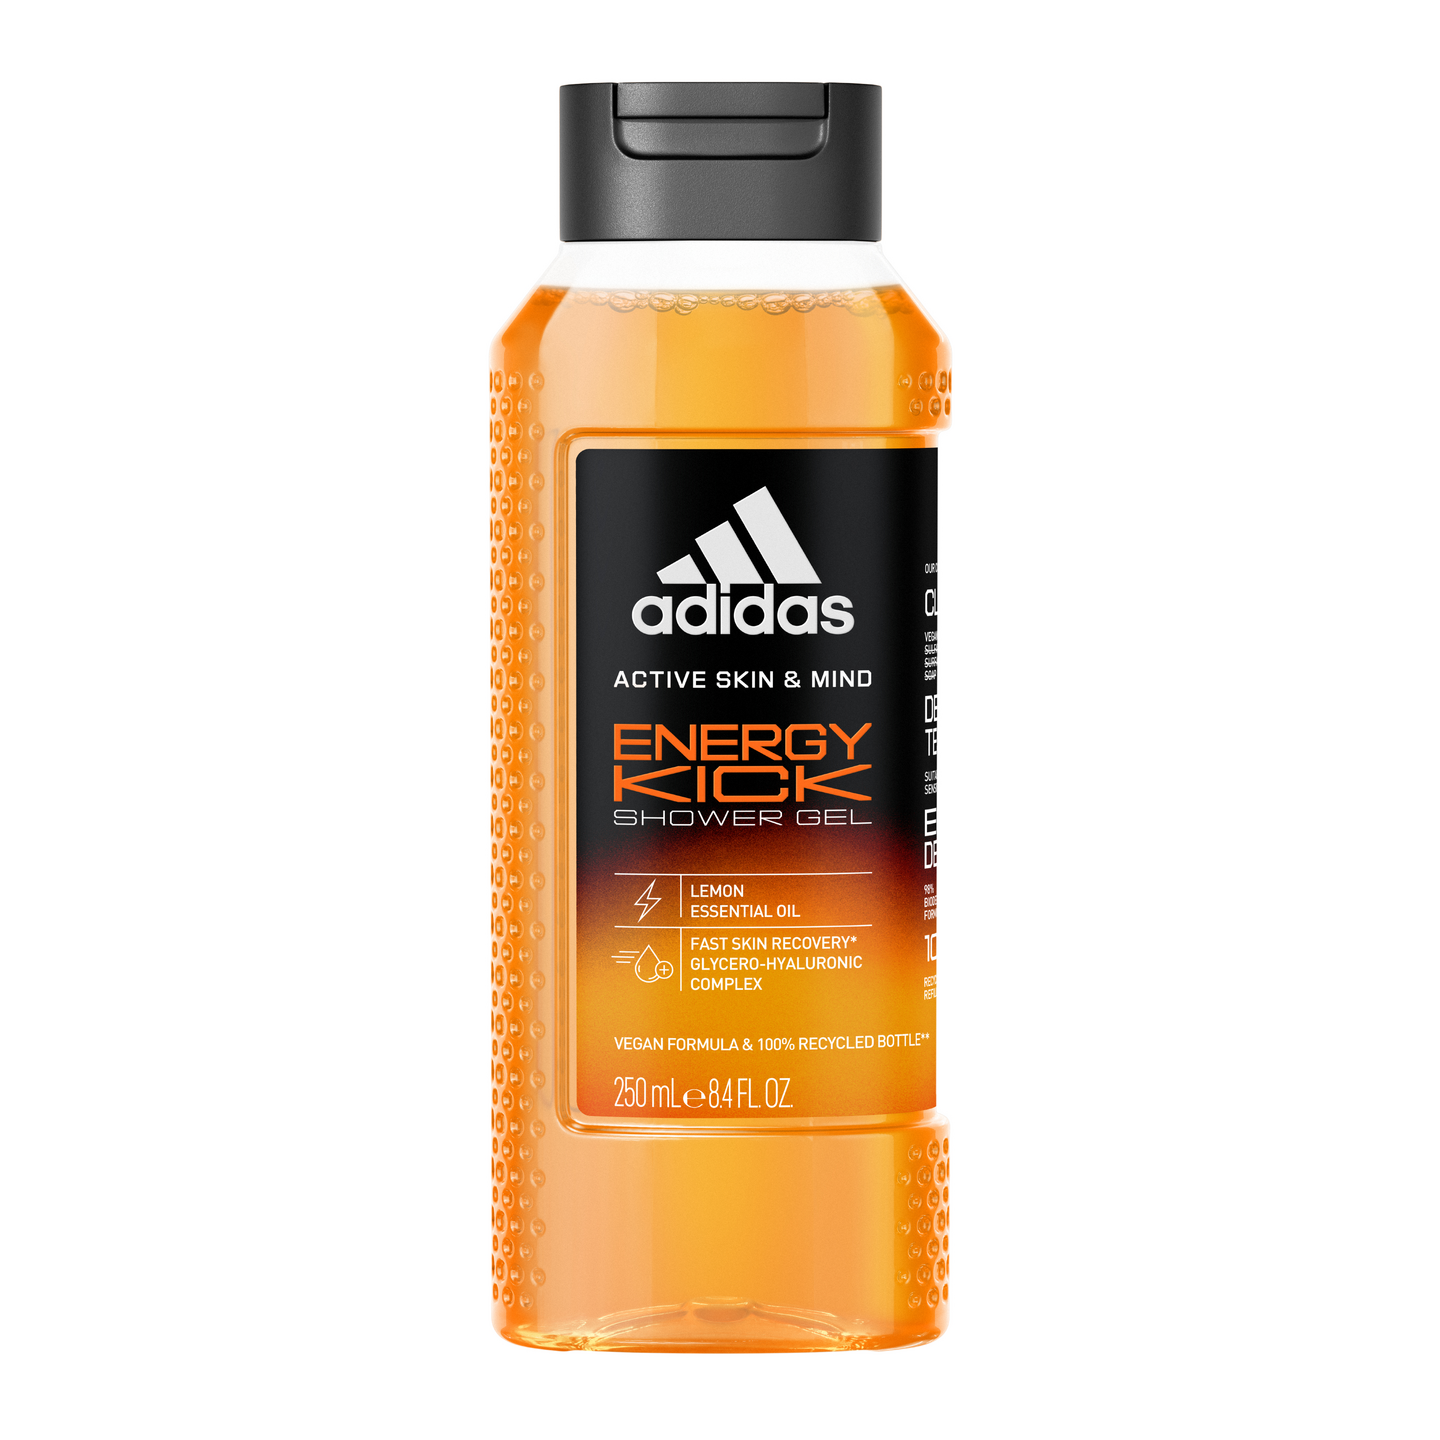 Adidas Active Skin & Mind Suihkugeeli 250ml Energy Kick miehille